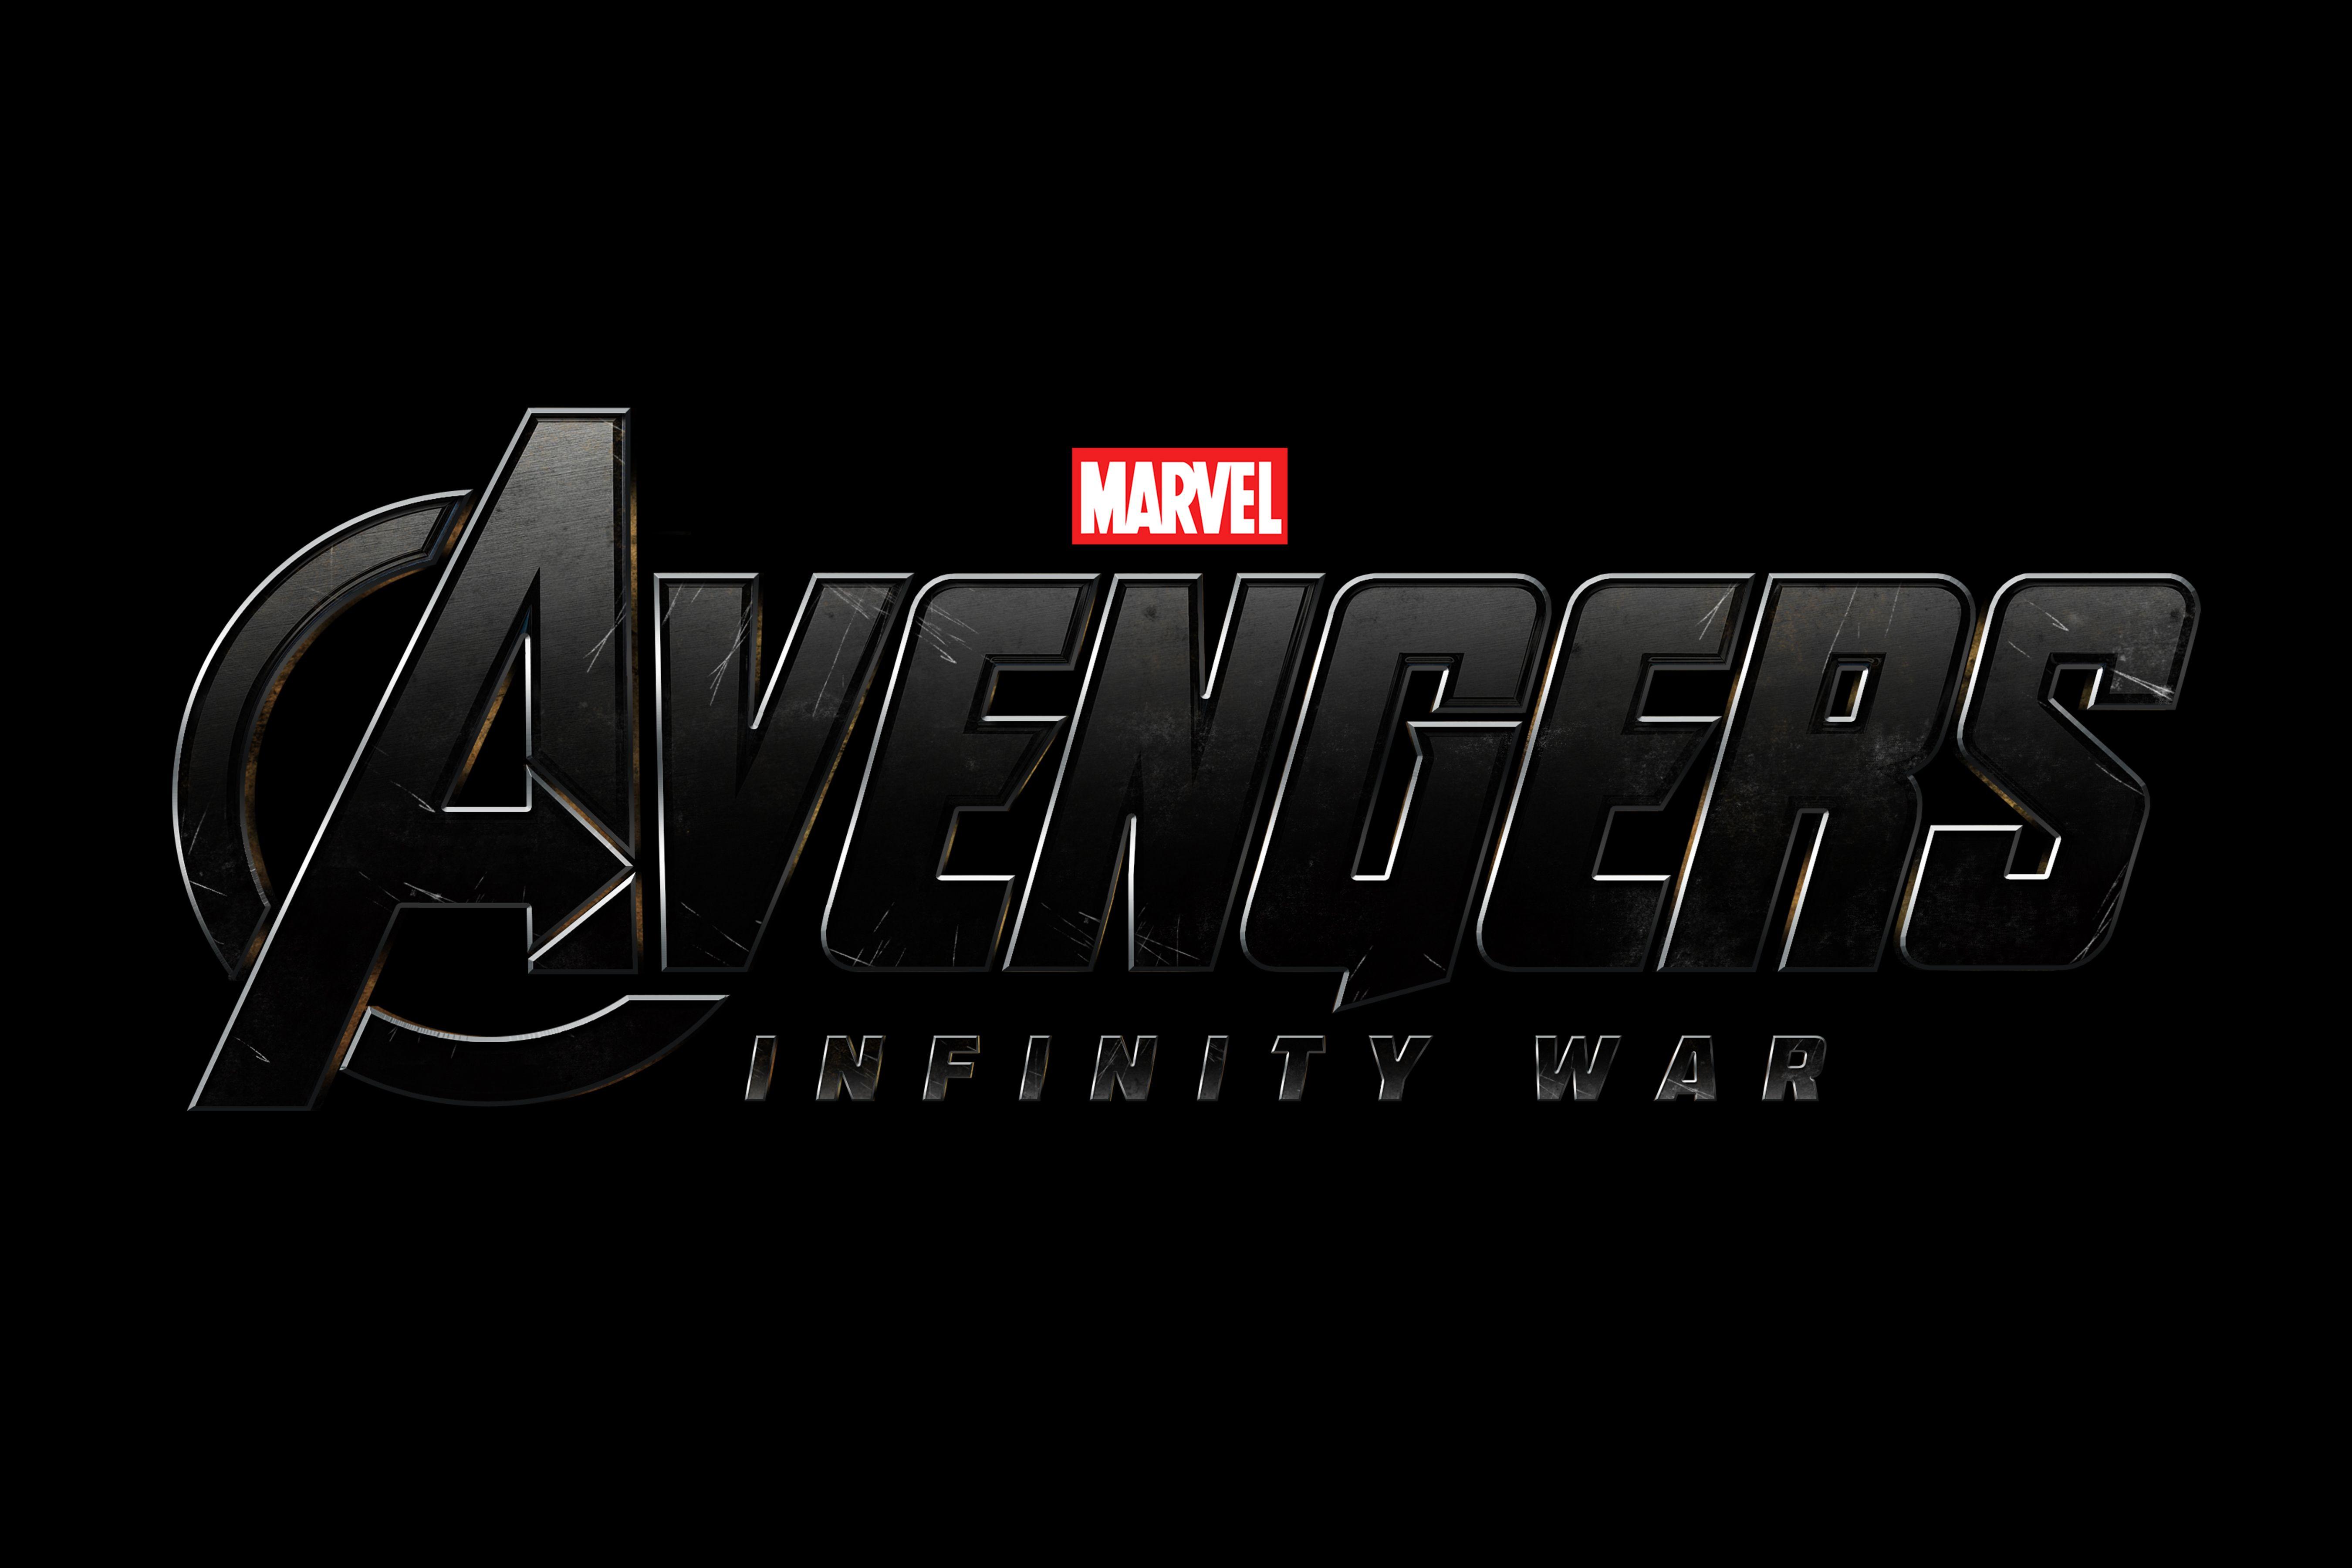 Marvel 2018 Logo - avengers infinity war, #infinity war, #avengers, #hd, movies